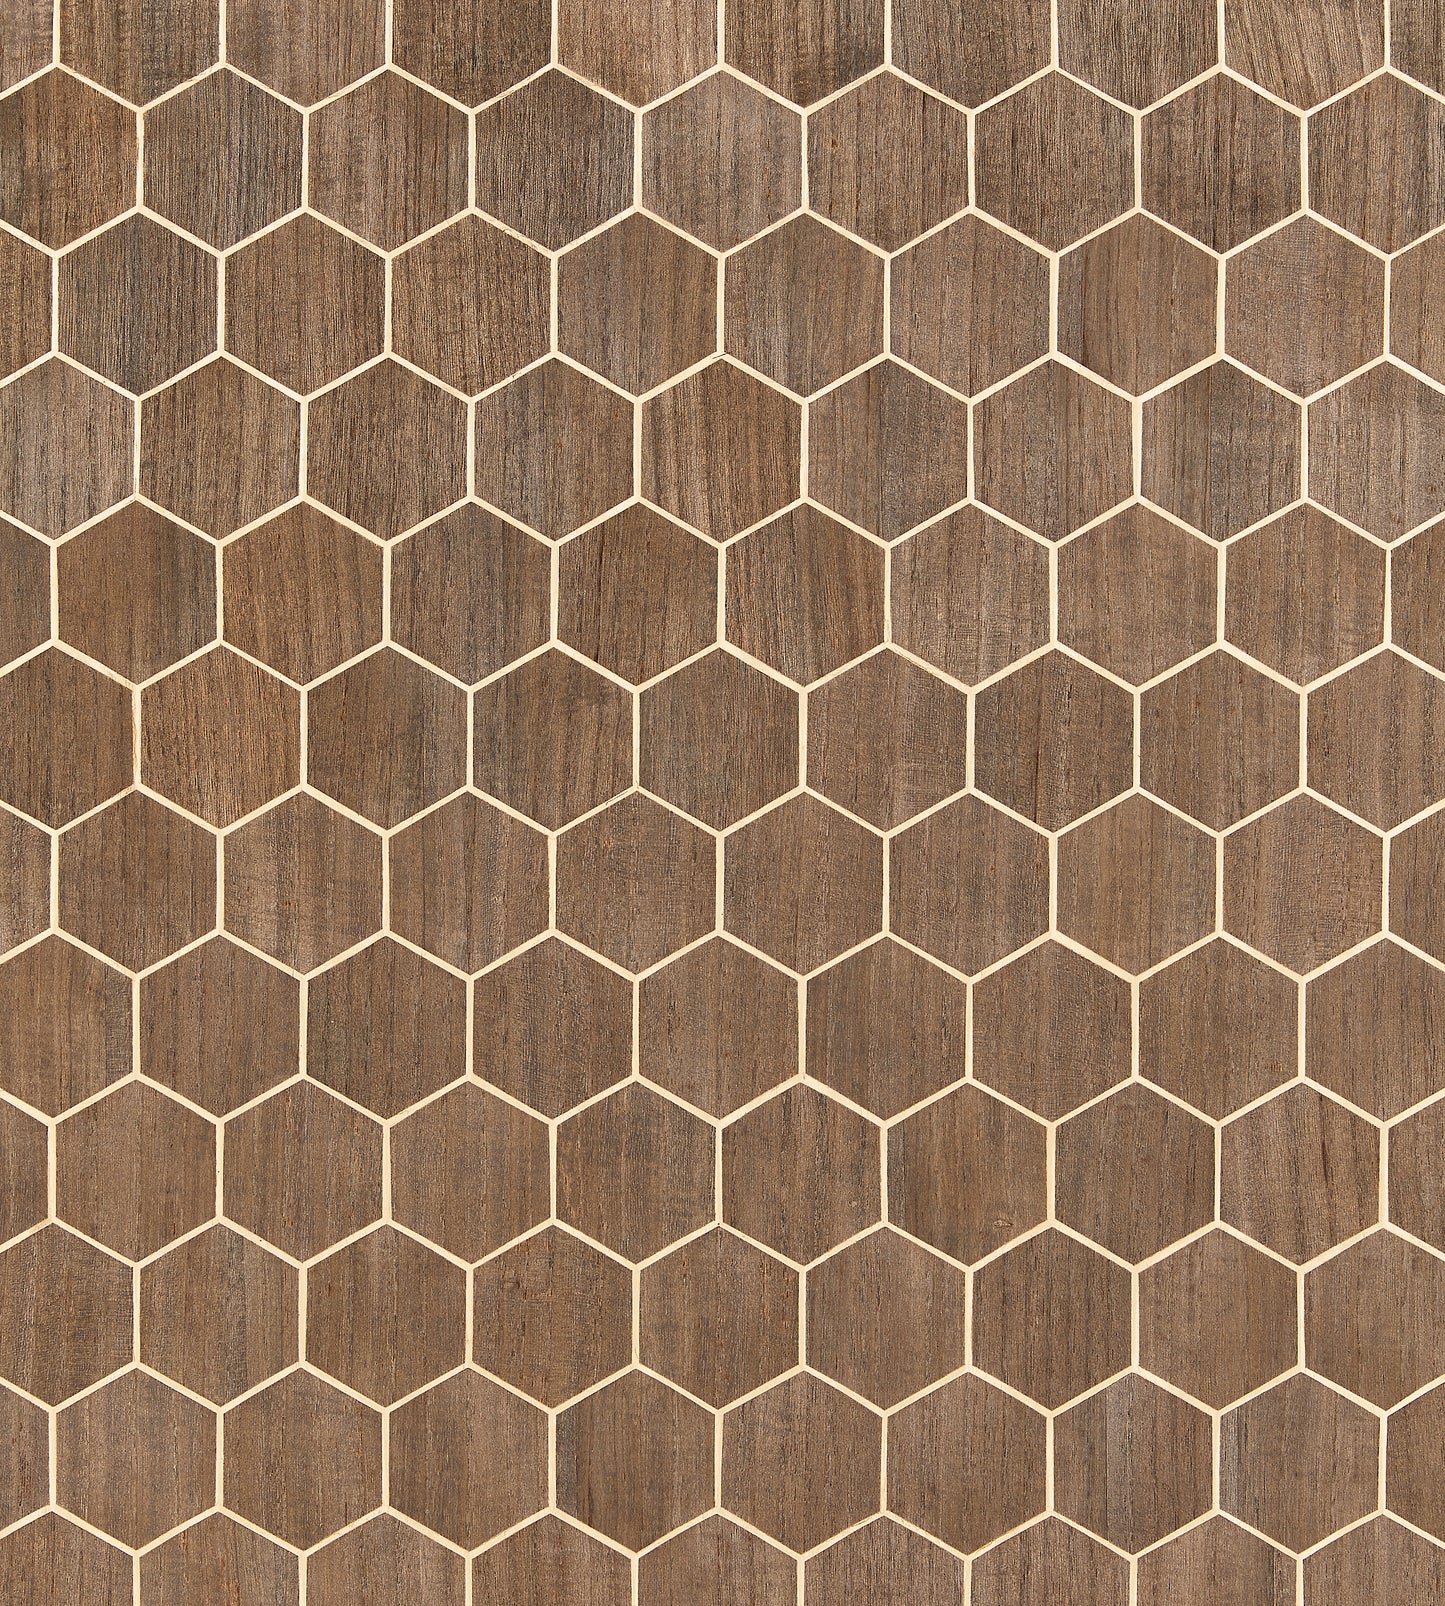 Looking Scalamandre Wallpaper Pattern Sc 0003Wp88477 Name Andante Chocolate Geometric|Graphic Wallpaper